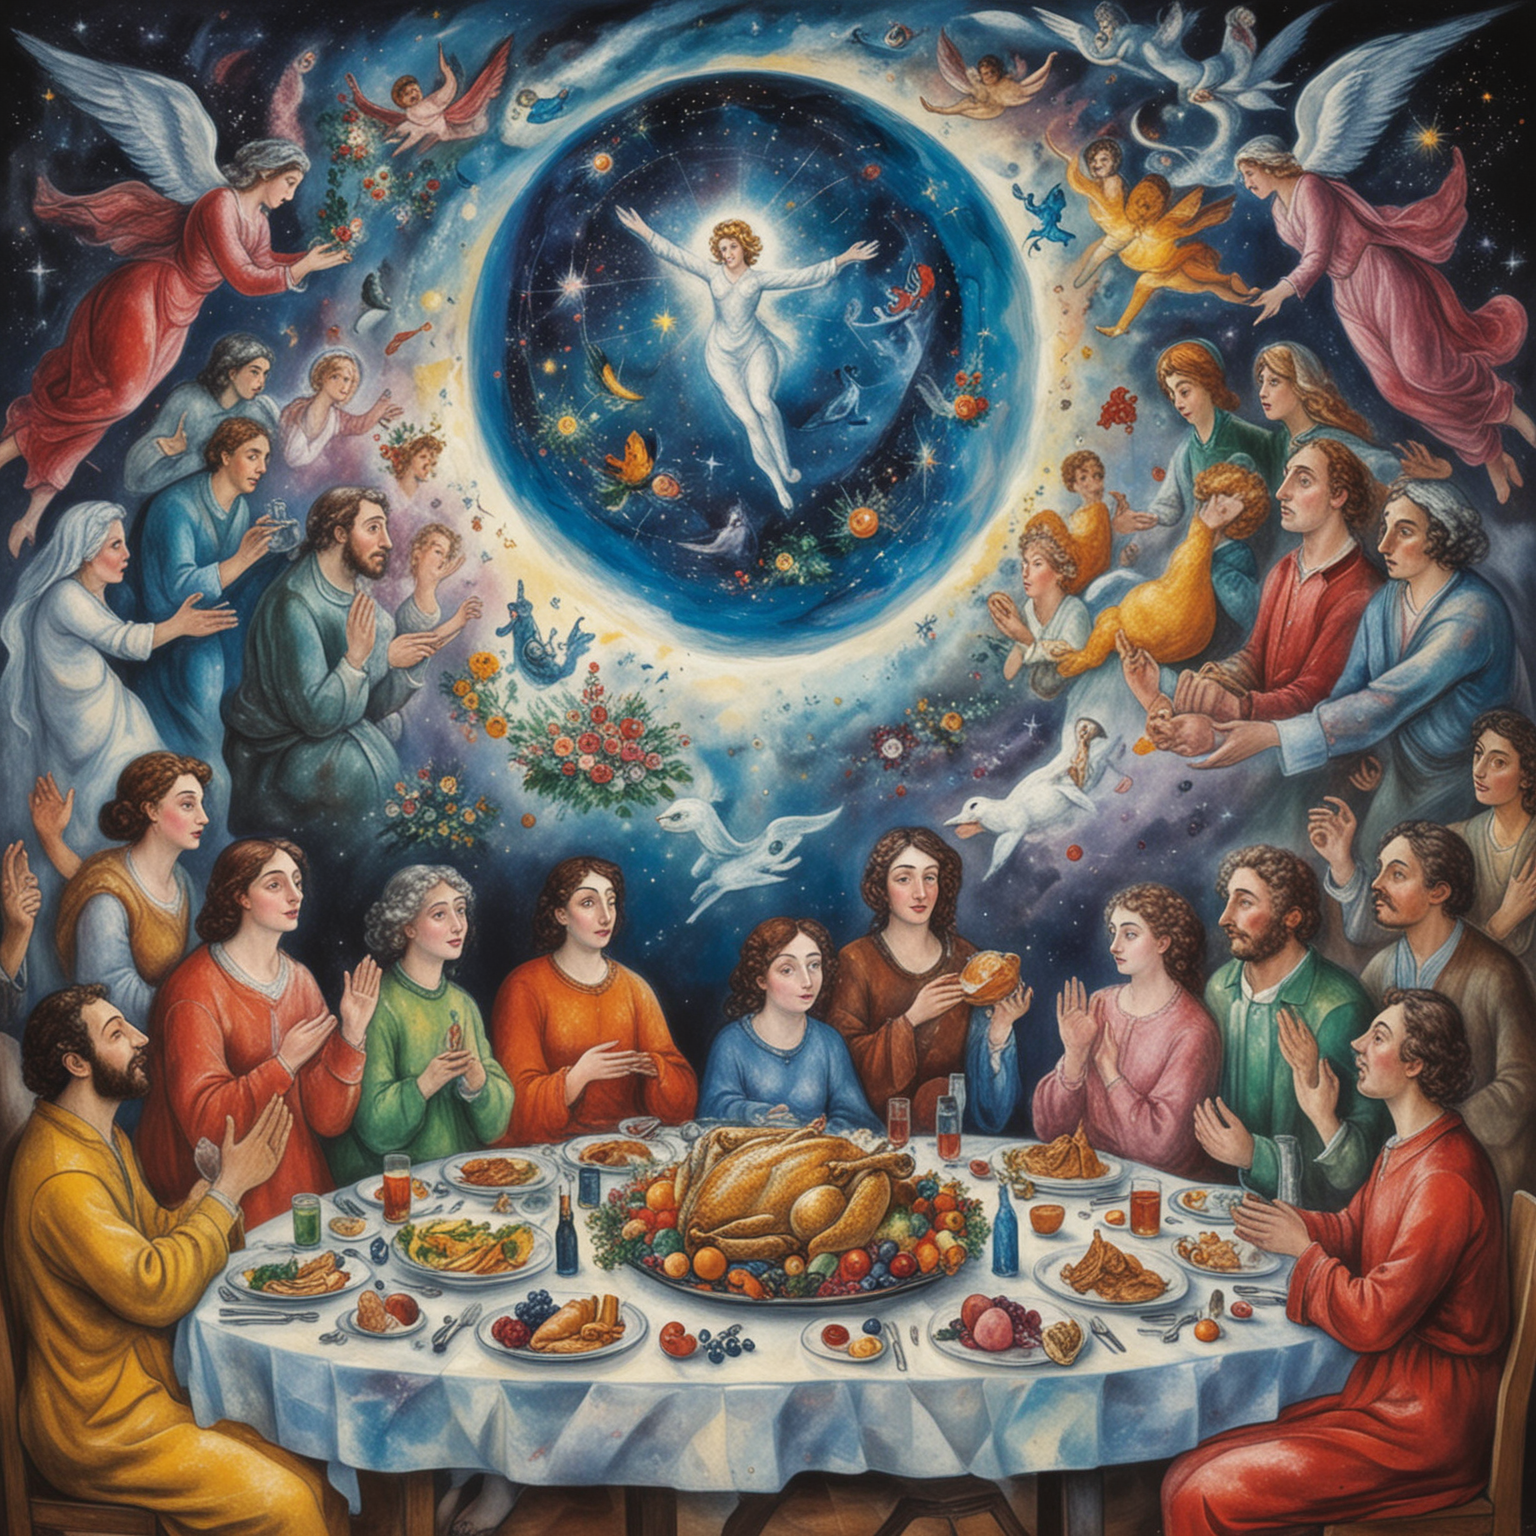 Chagall Style Cosmic Heavenly Feast Joyful Gathering of Diverse People